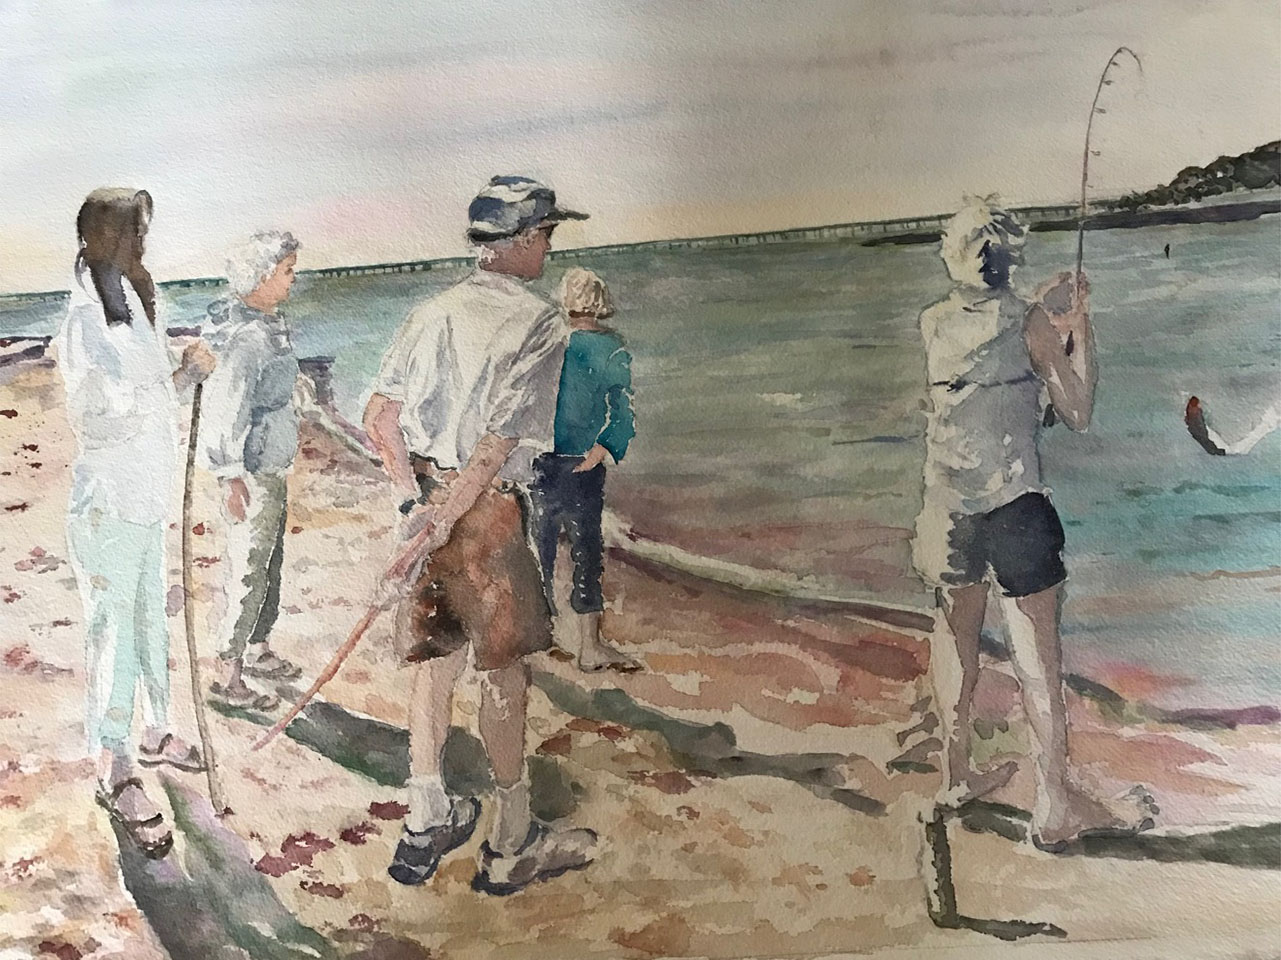 Fishing in the Carolinas